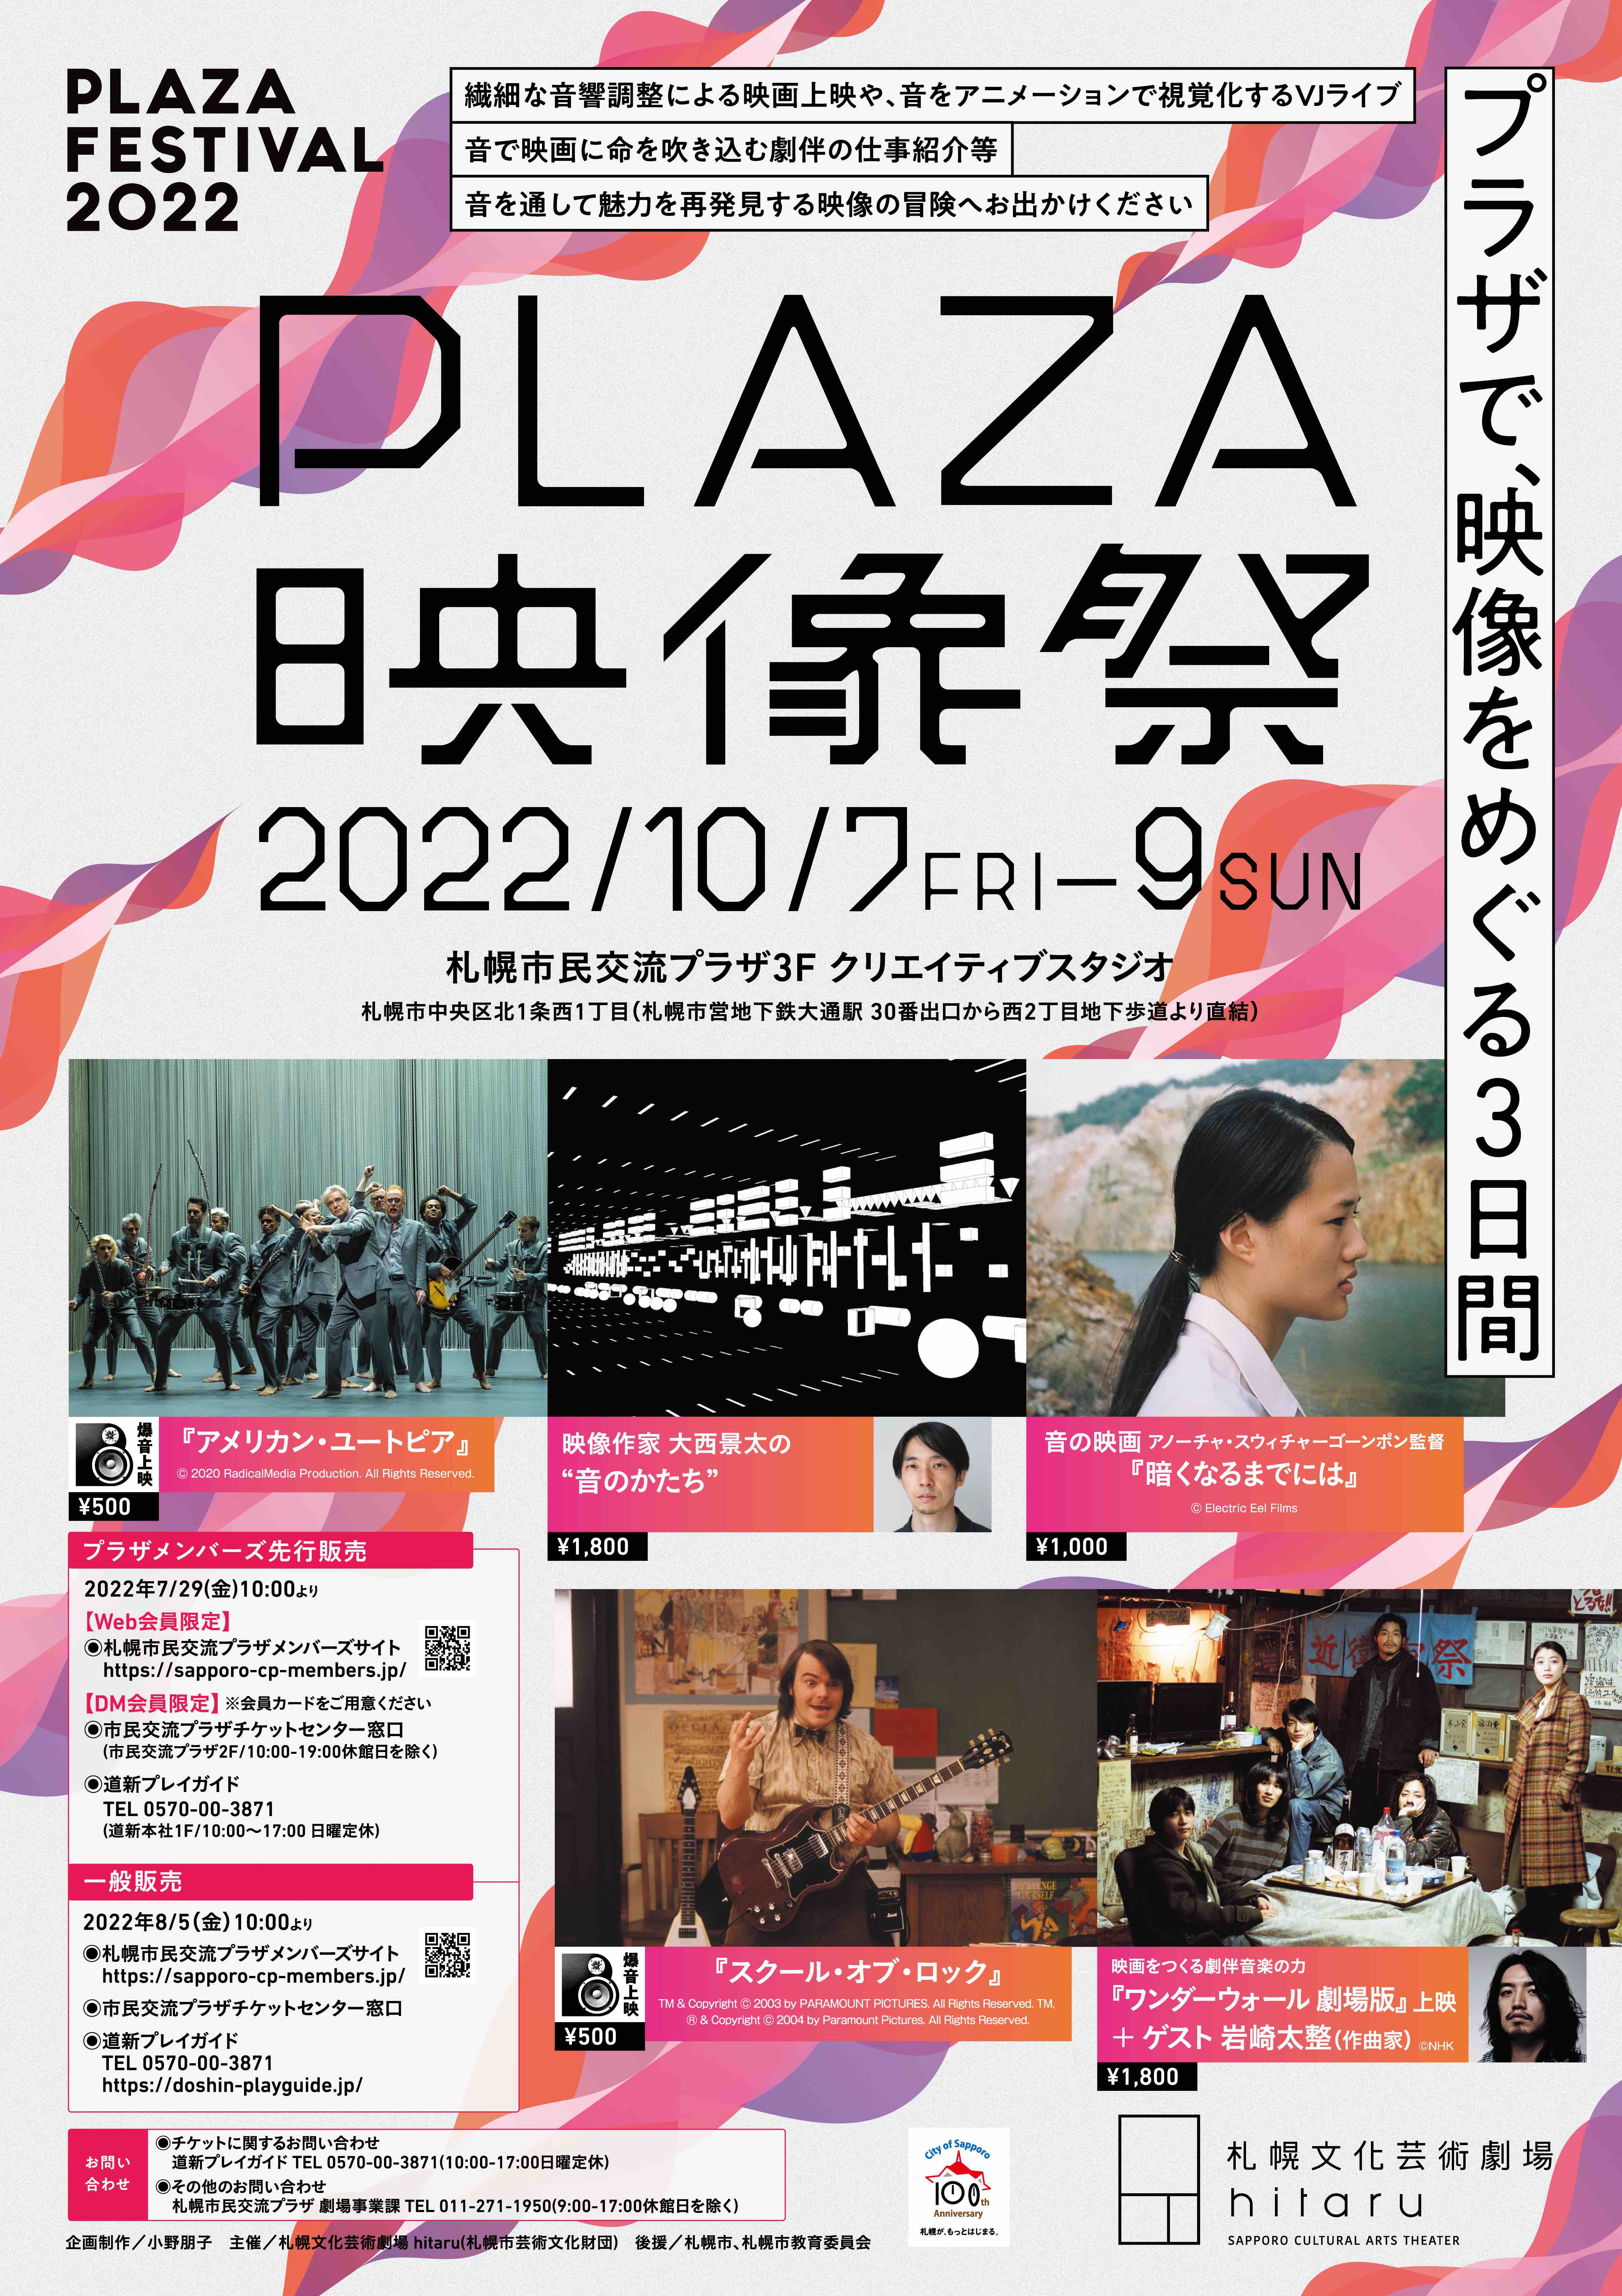 Plaza Festival 2022 Plaza Film Festival image